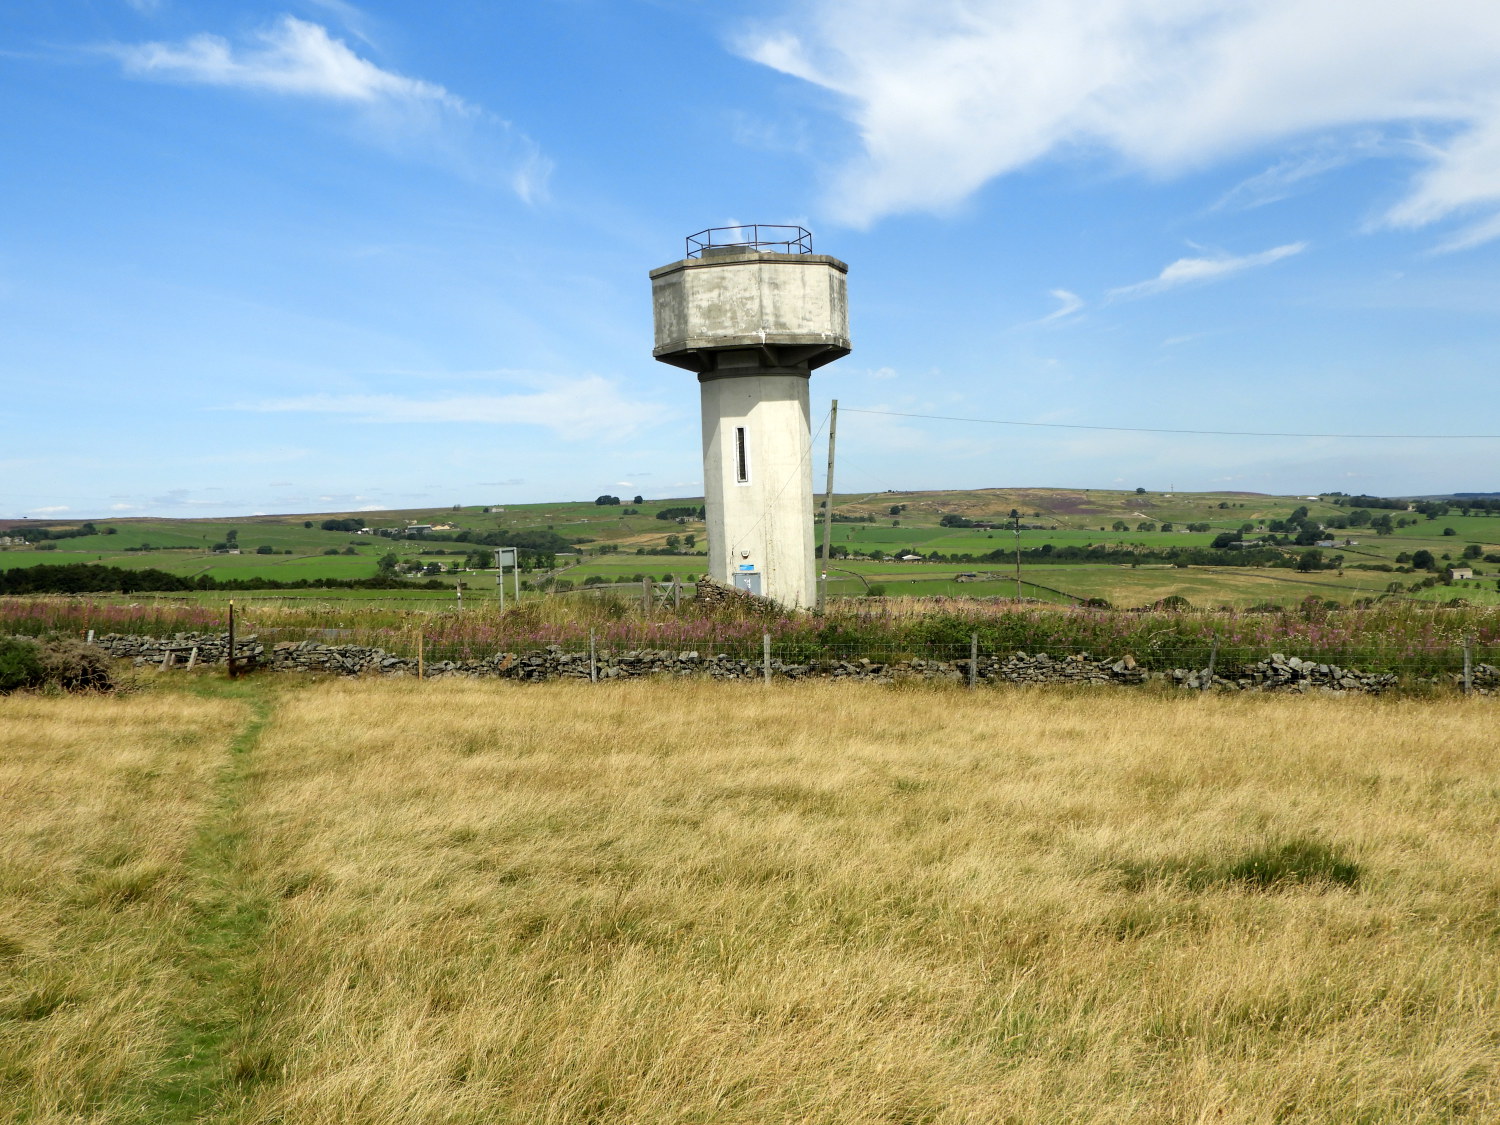 Nearing Padside water tower